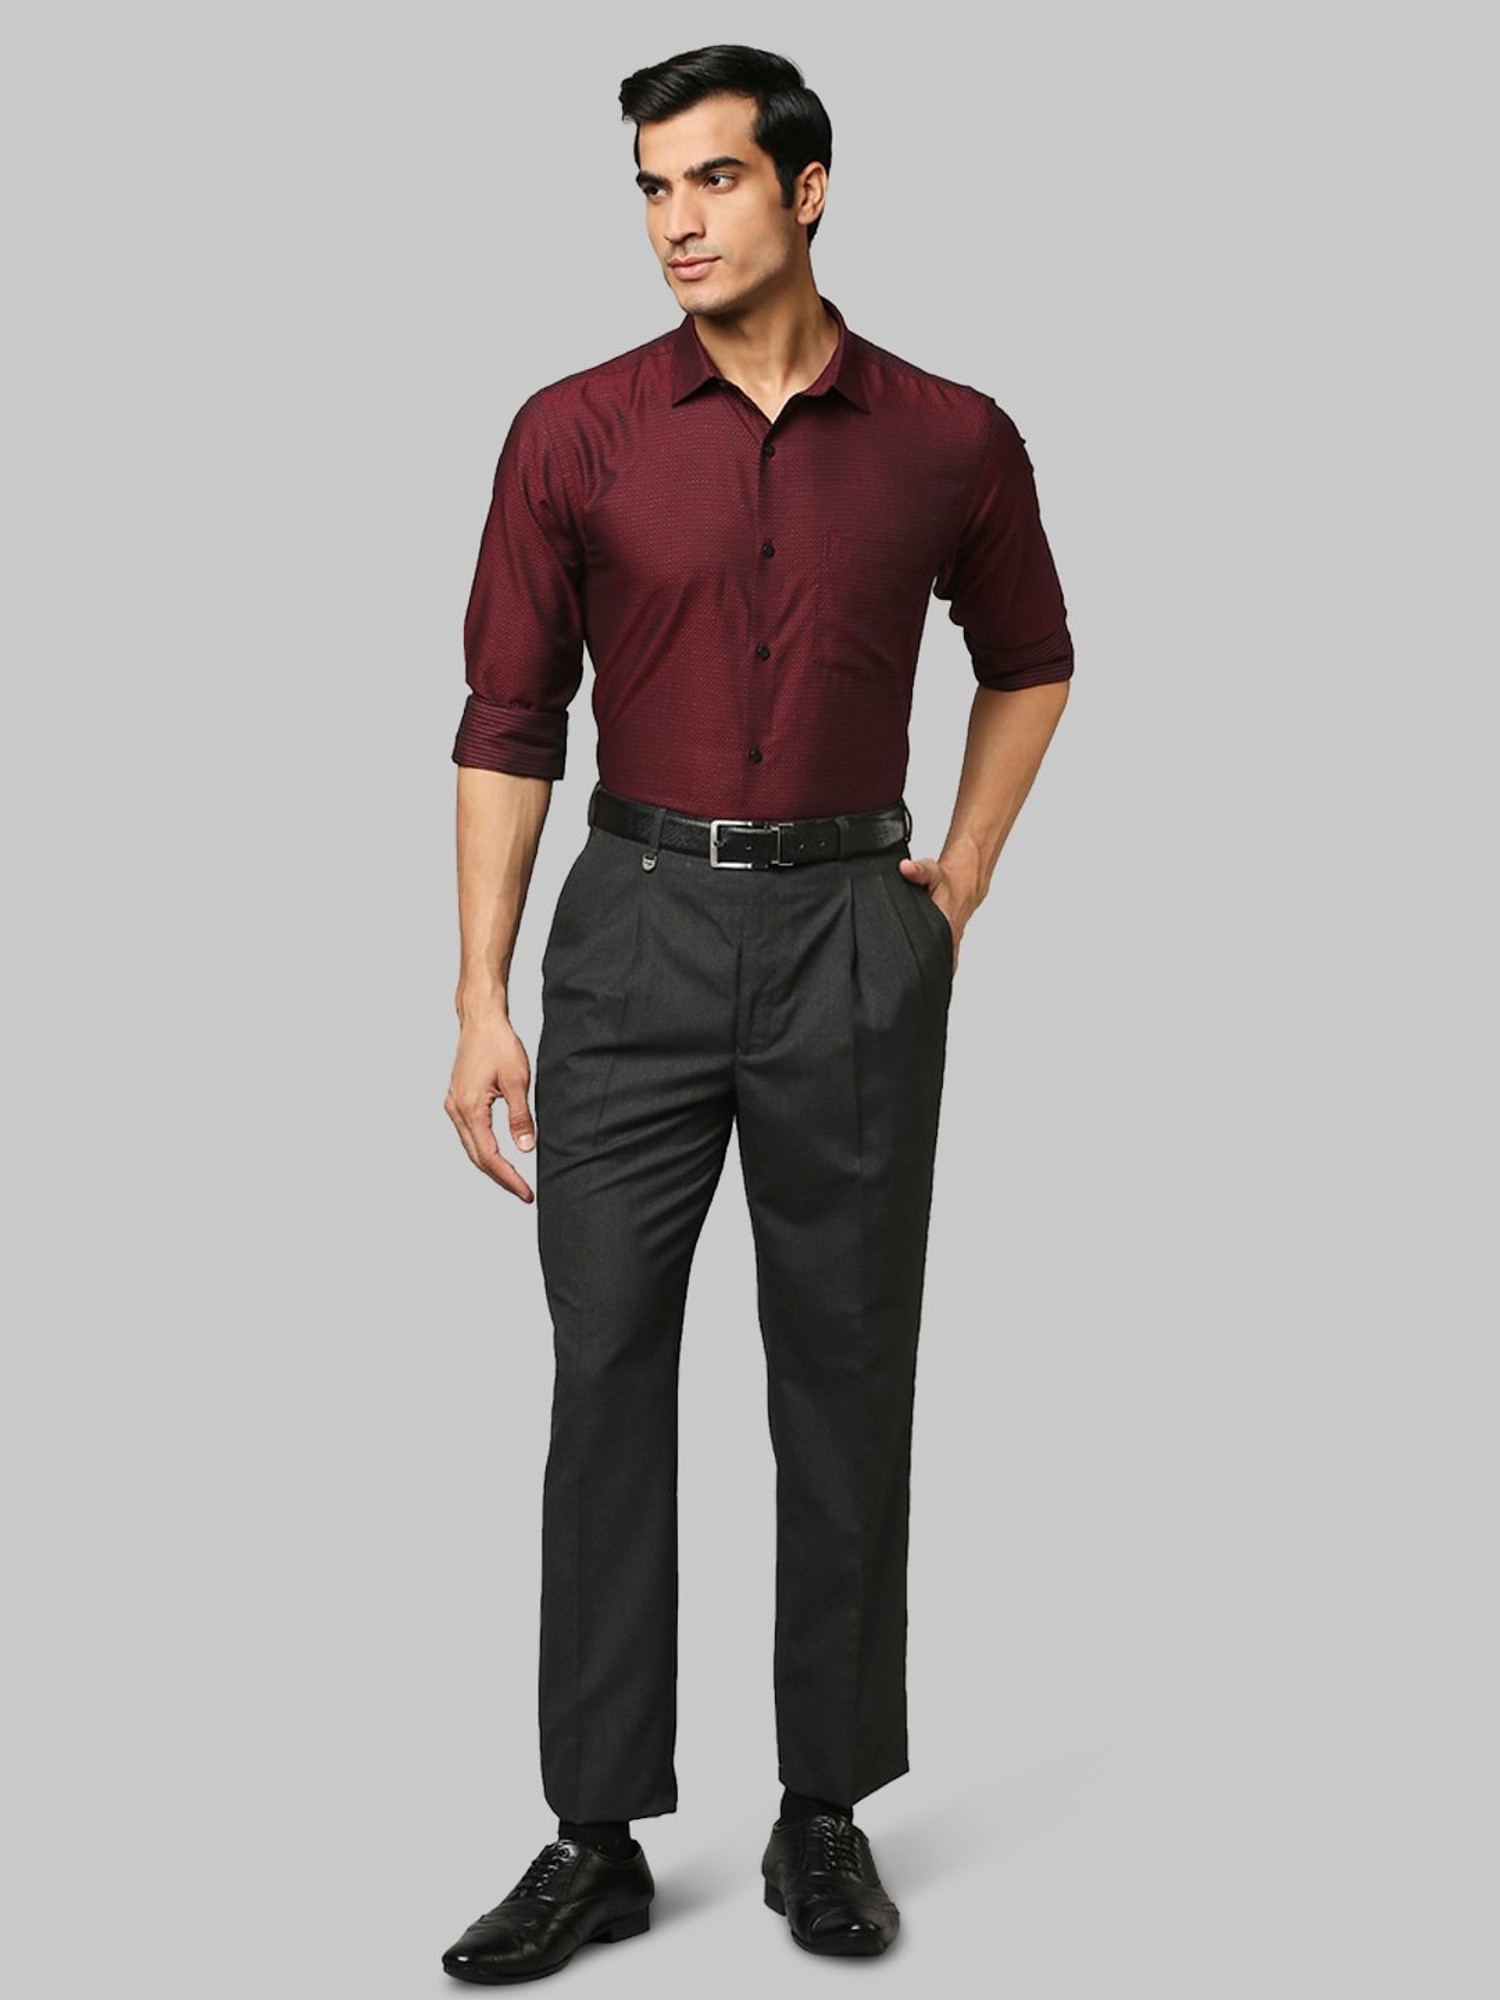 10 Best Maroon Shirt Matching Pant Ideas | Maroon Shirts Combination Pants  - TiptopGents